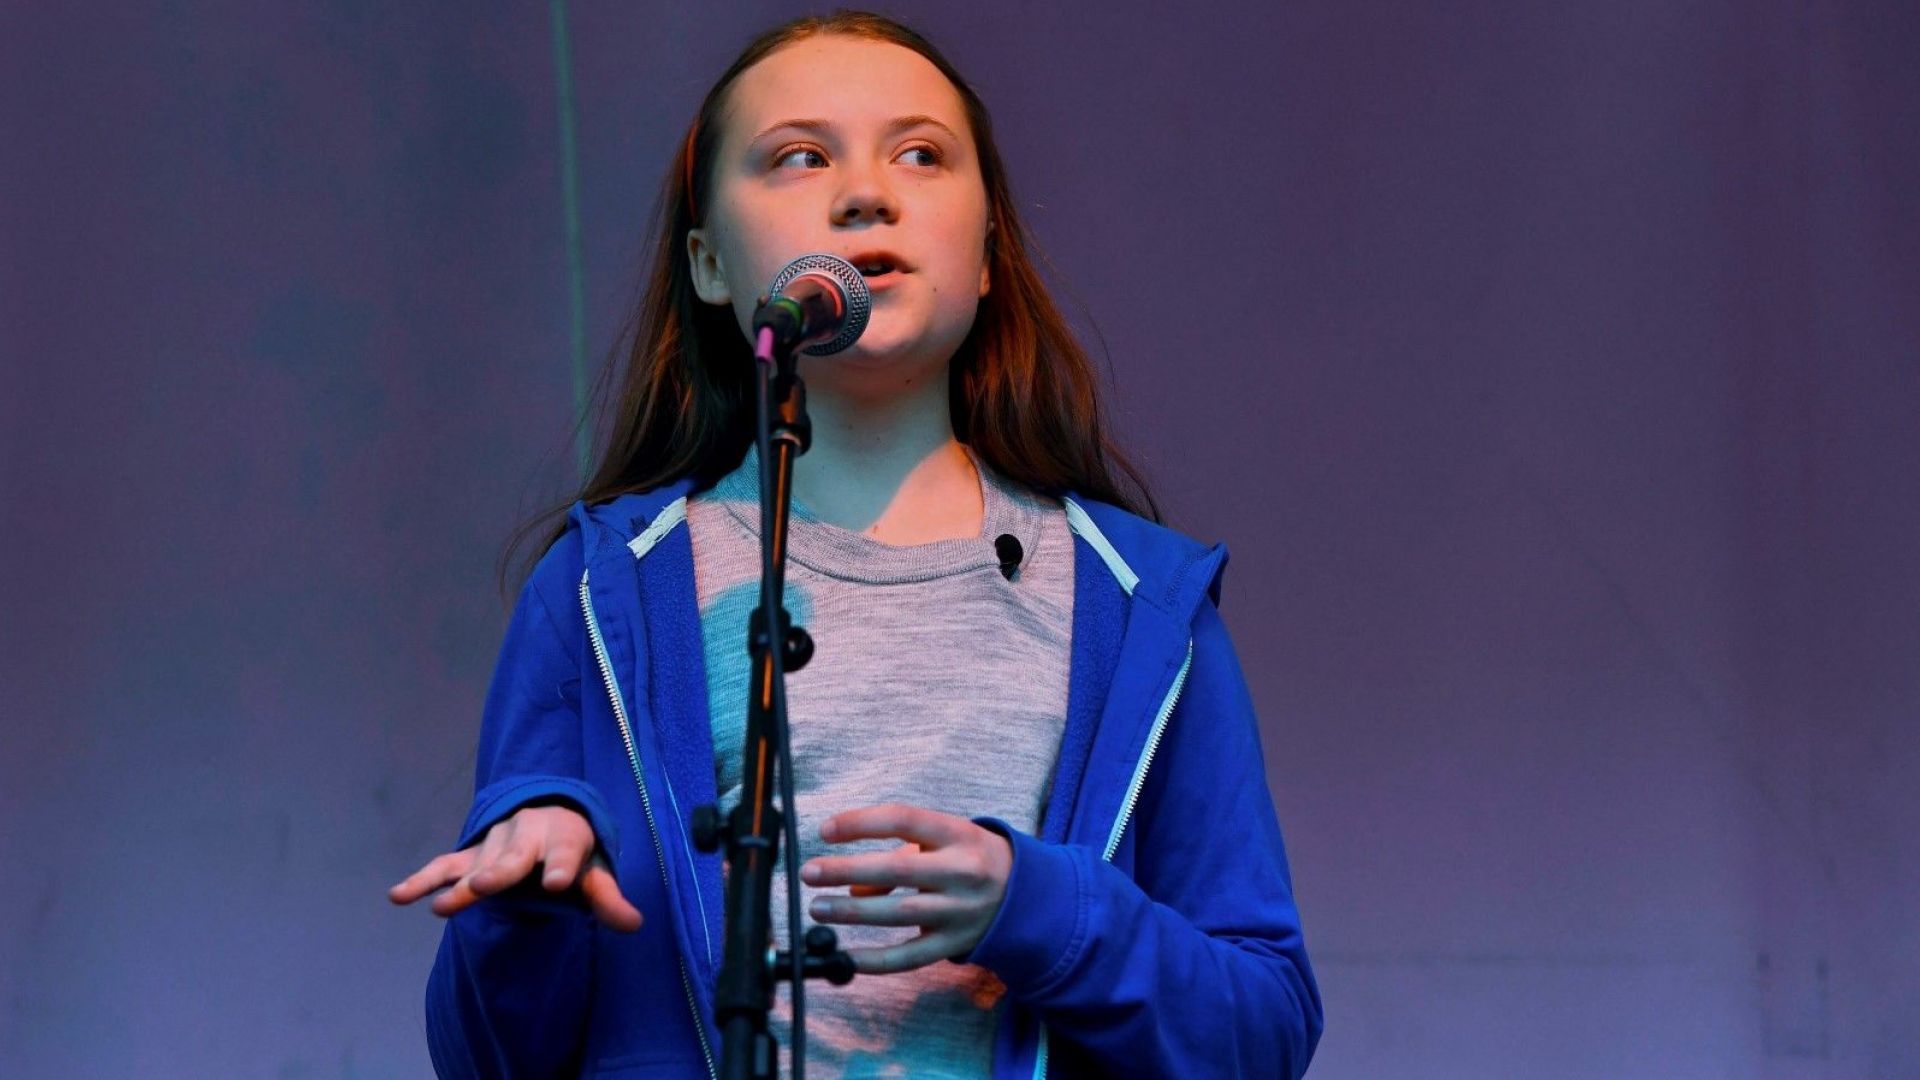 Младата екоактивистка Грета Тунберг стана поредната публична личност, която призова